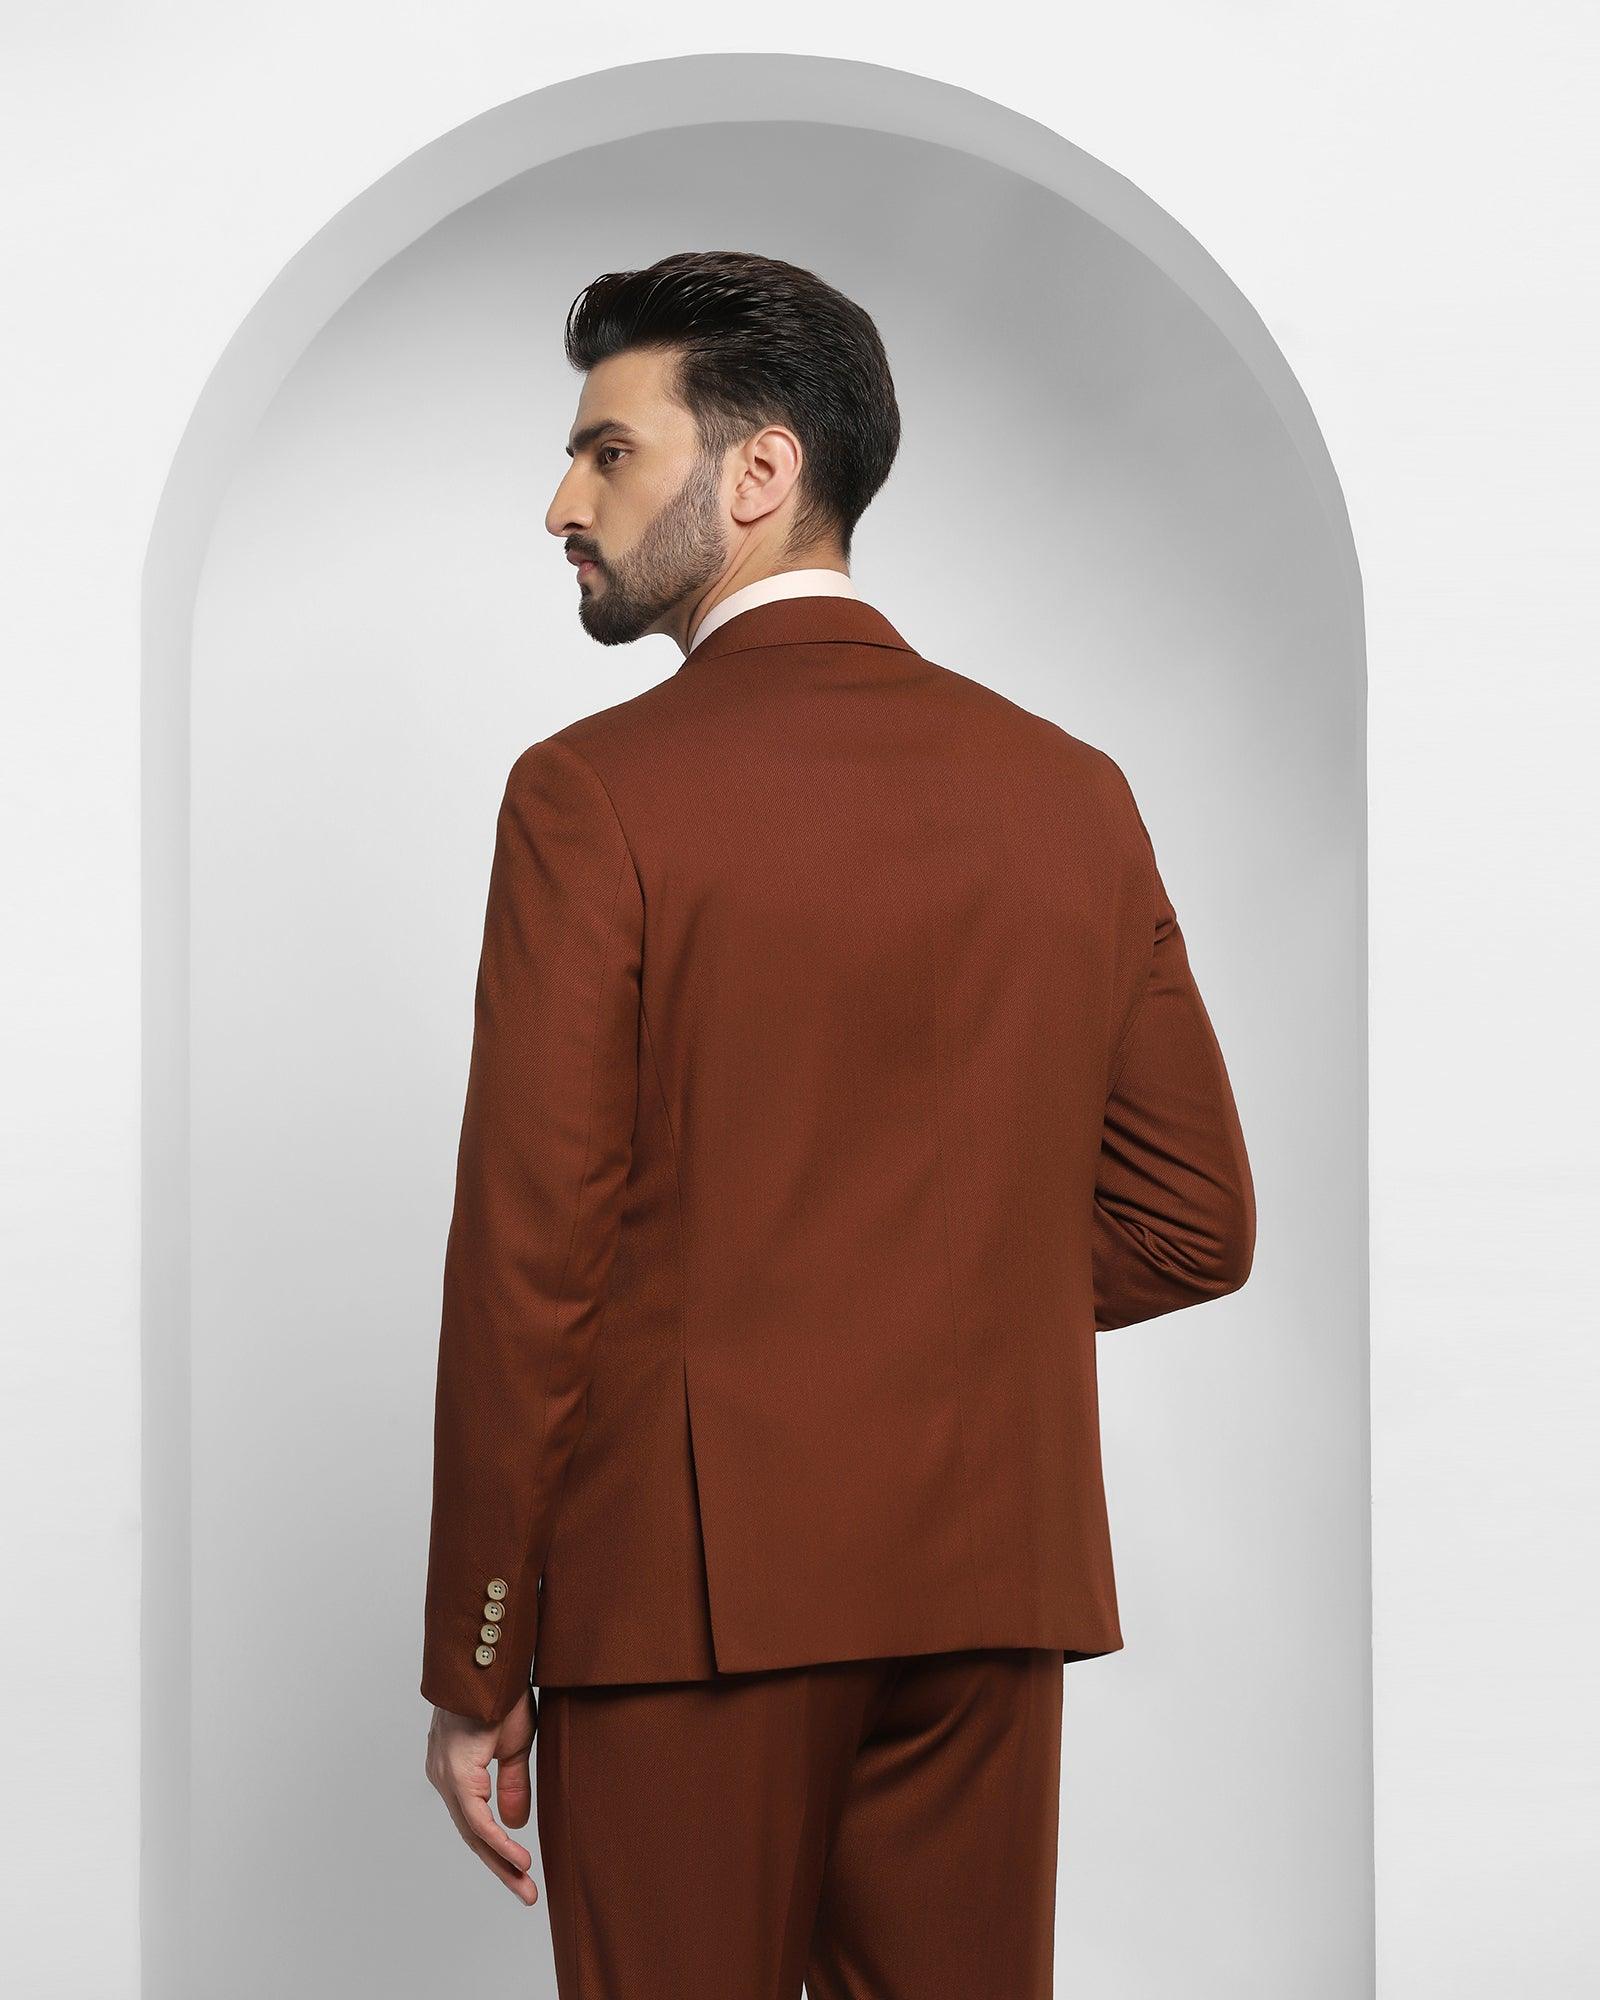 Two Piece Teal Solid Formal Suit - Cabrey